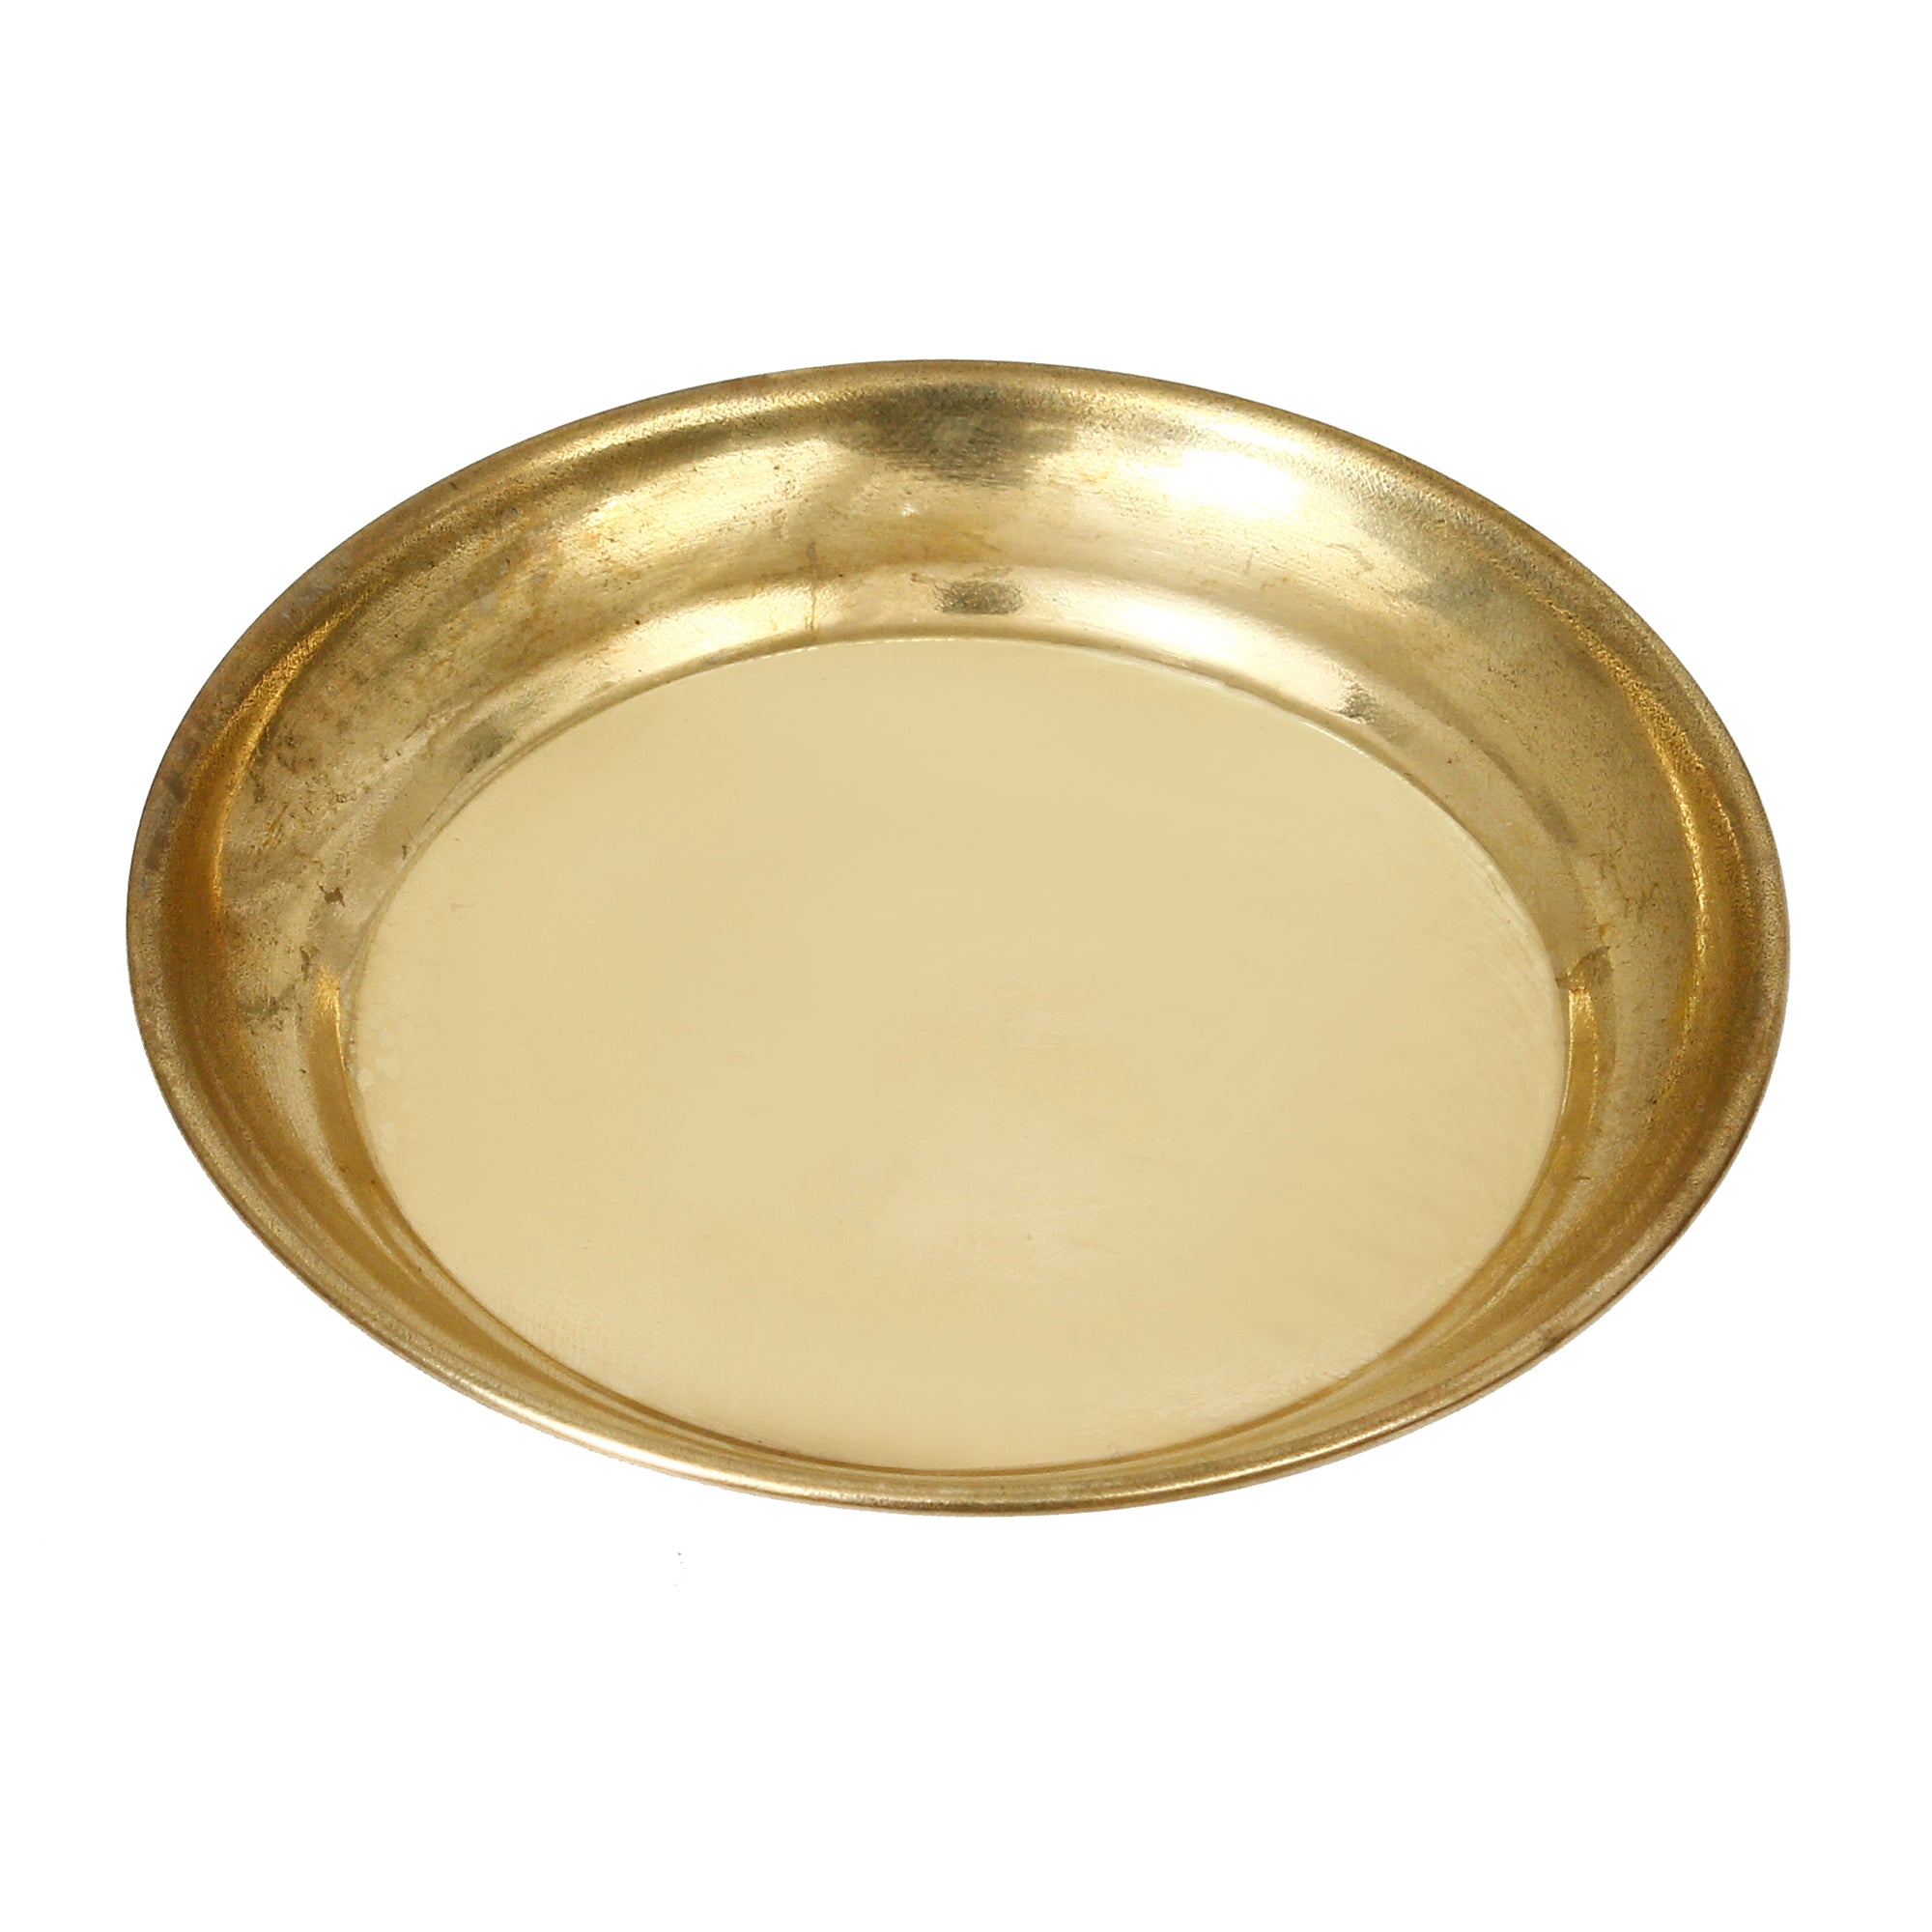 eCraftIndia Golden Brass Pooja Thali With 2 Bowls, 1 Spoon & 1 Glass 4